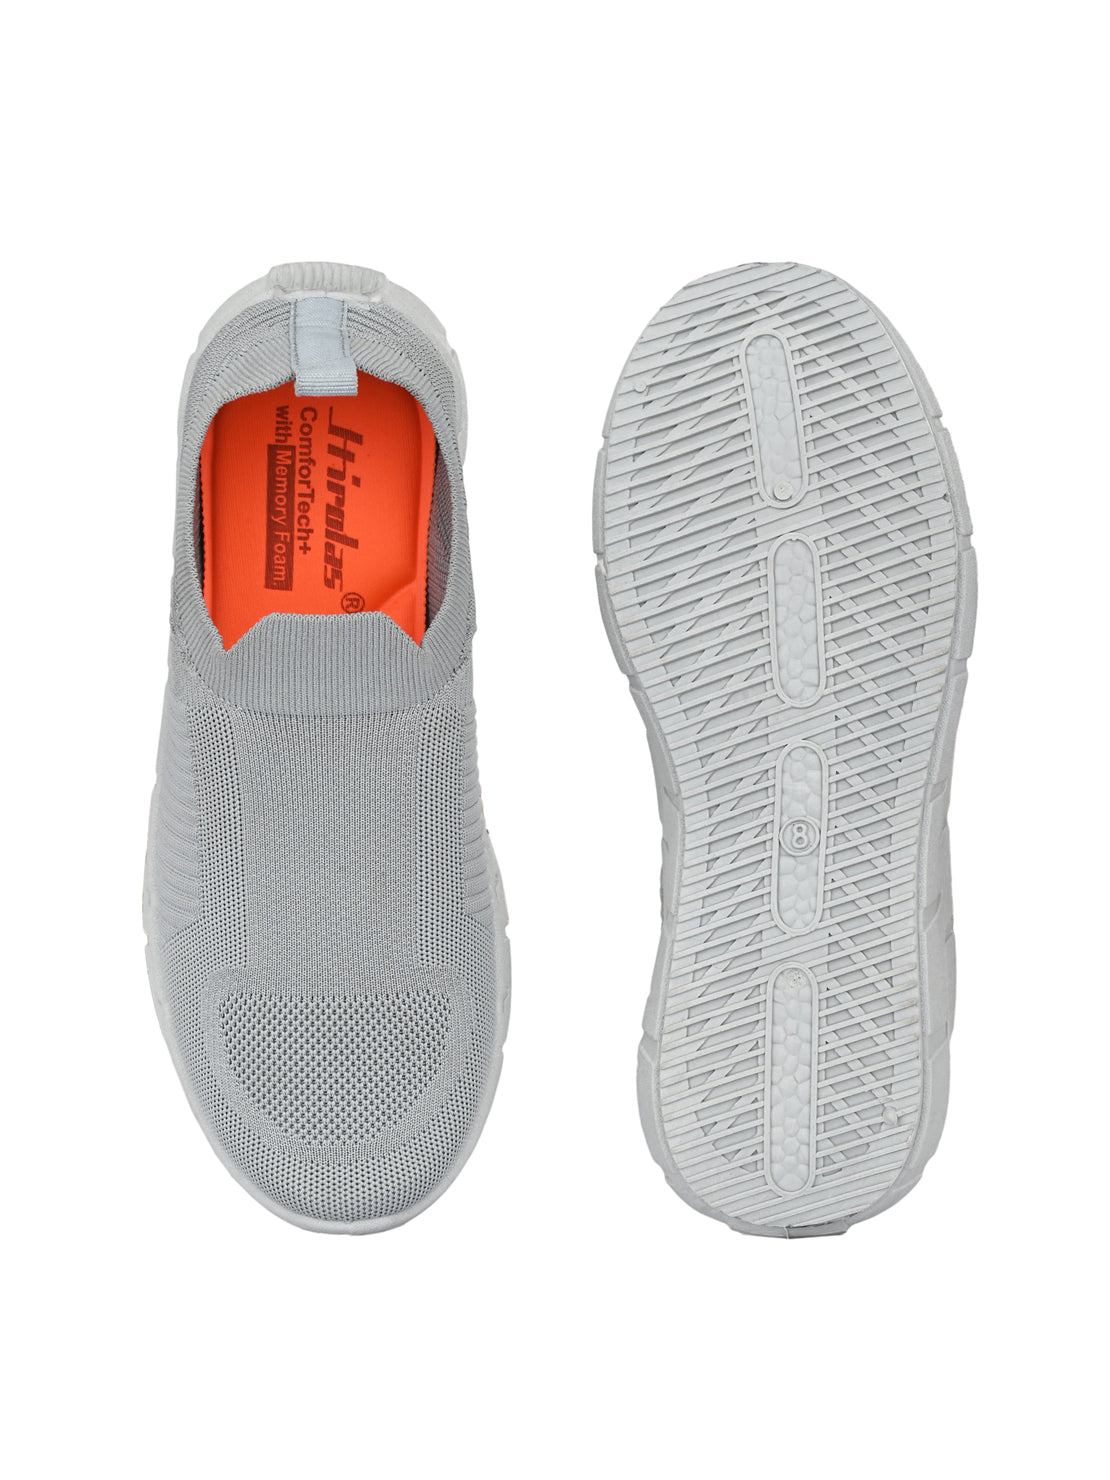 Hirolas® Men's Grey Knitted Running/Walking/Gym Slip On Sport Shoes (HRL2048GRY)